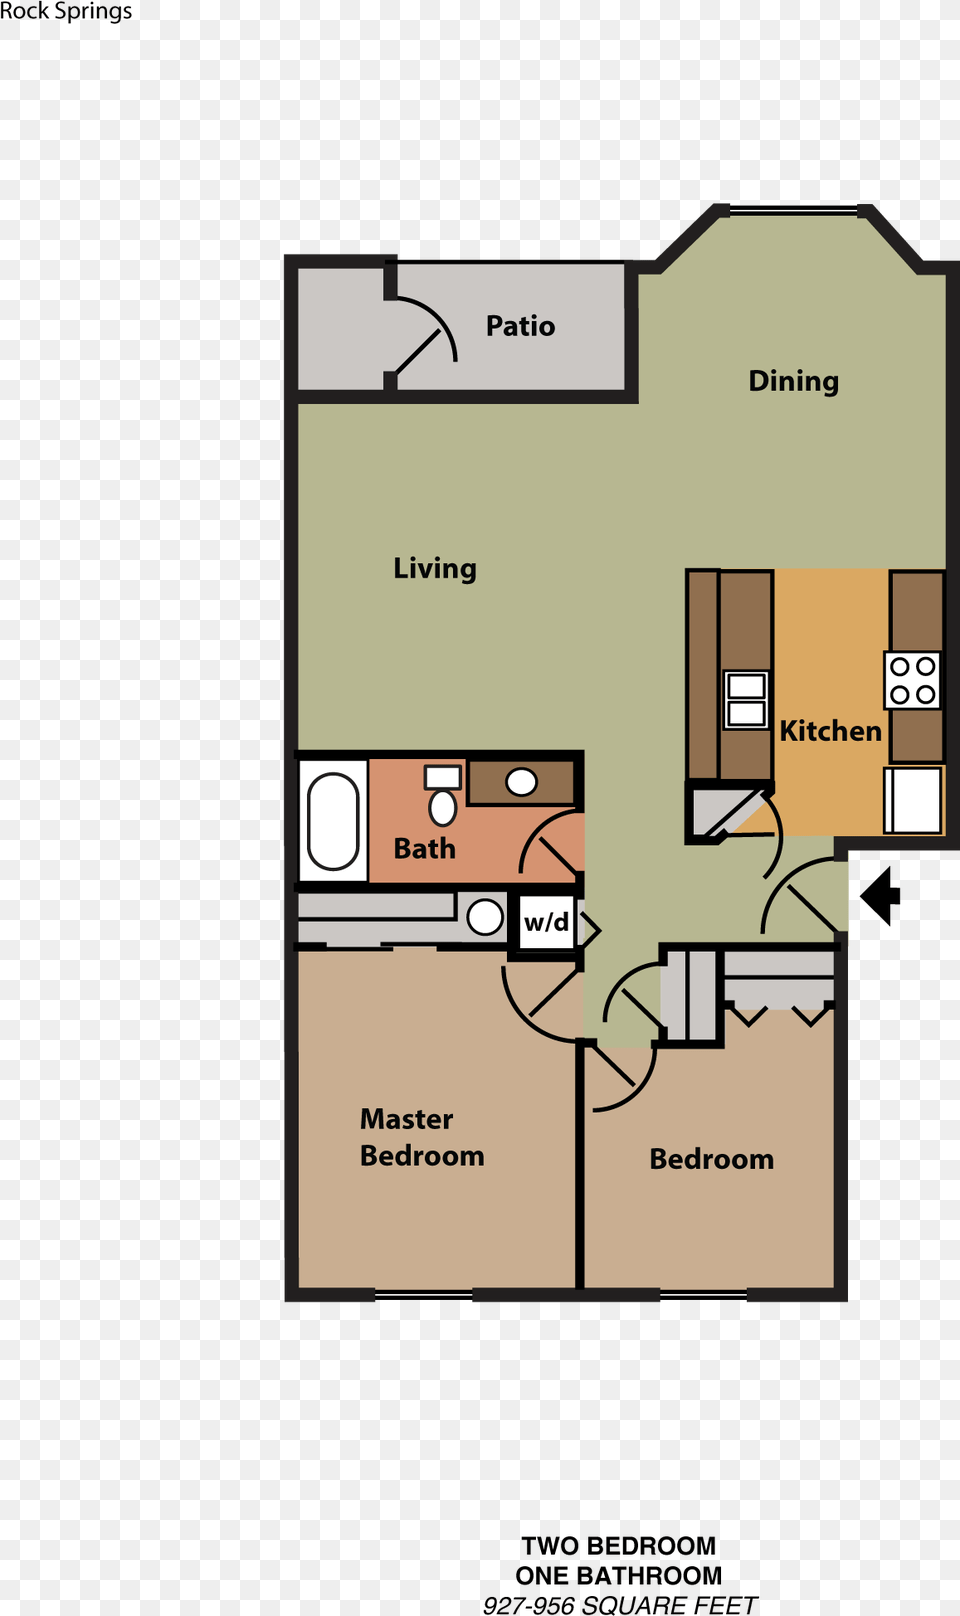 Rock Springs Apartments Cheney Floorplans, Chart, Diagram, Floor Plan, Plan Png